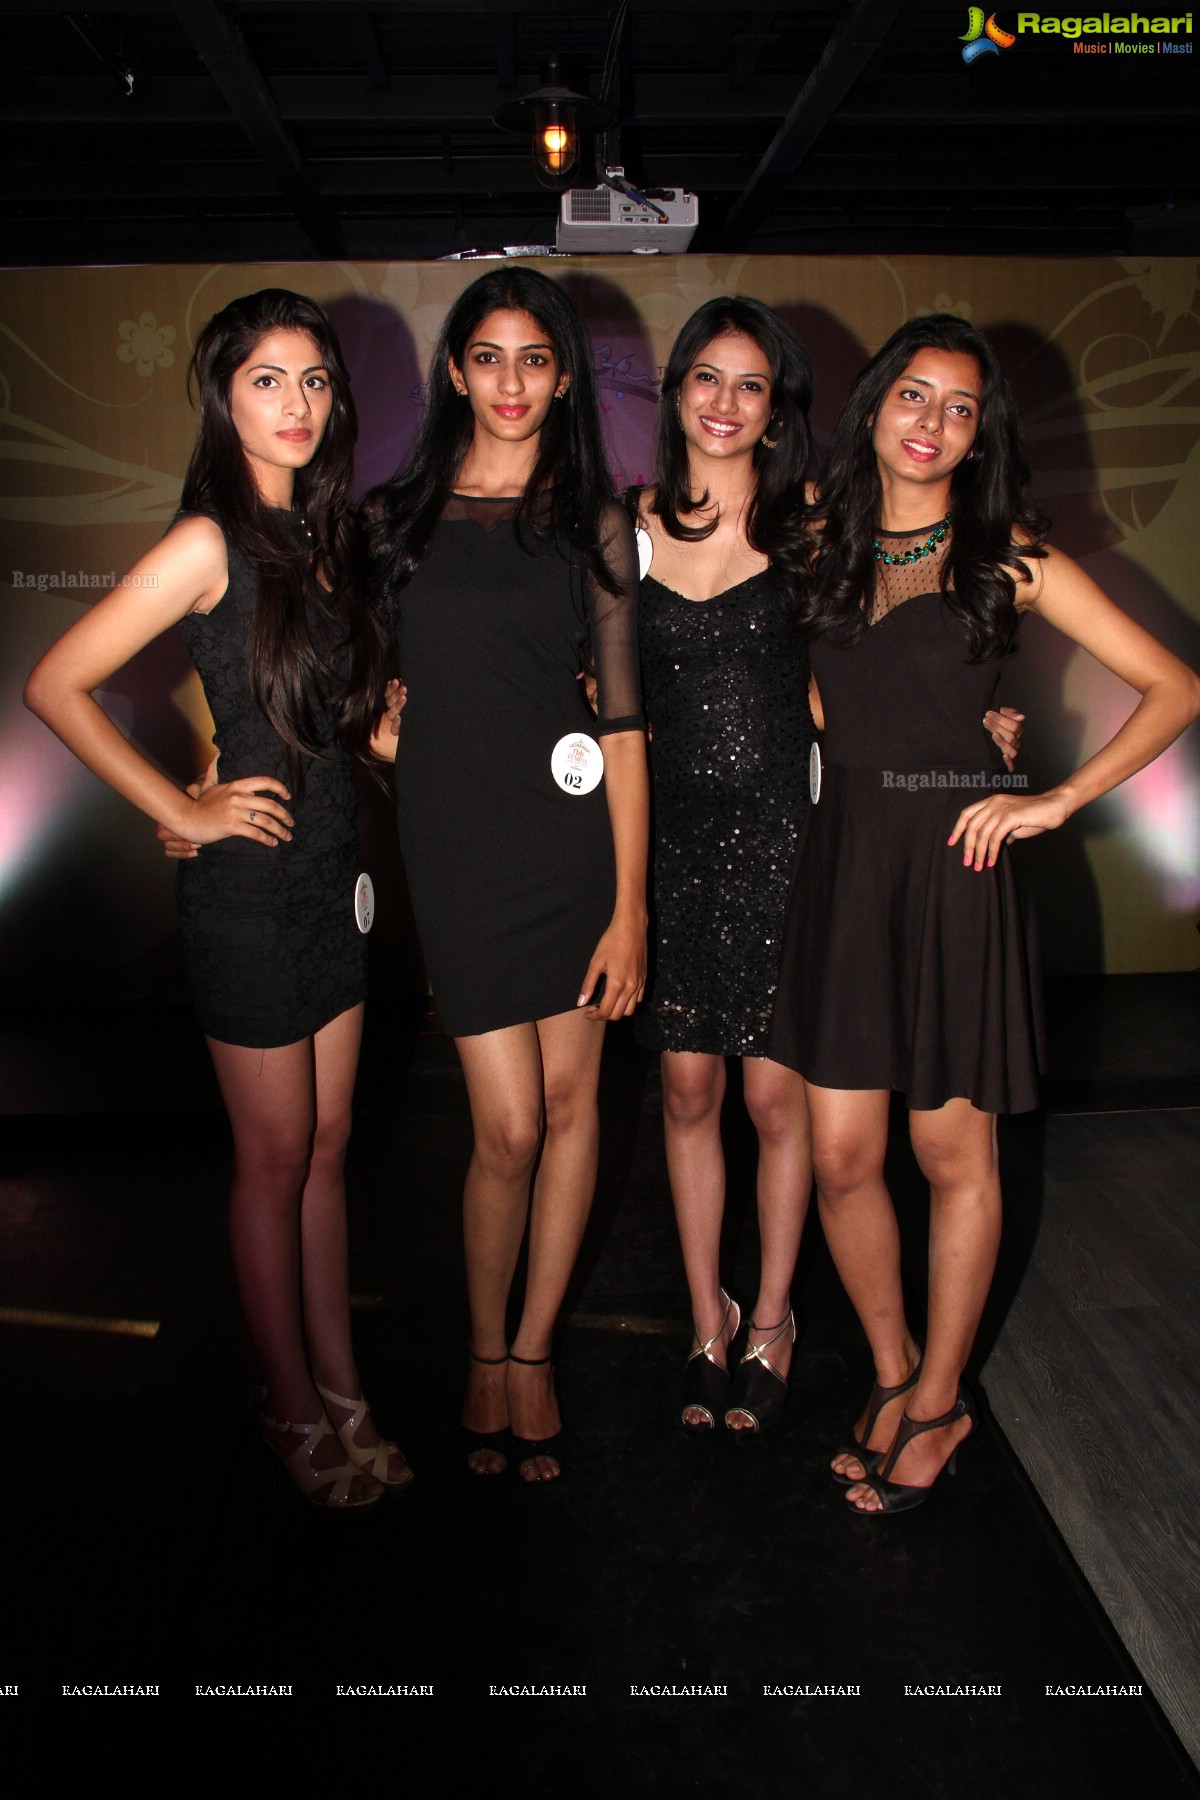 fbb Femina Miss India 2015 Hyderabad Auditions